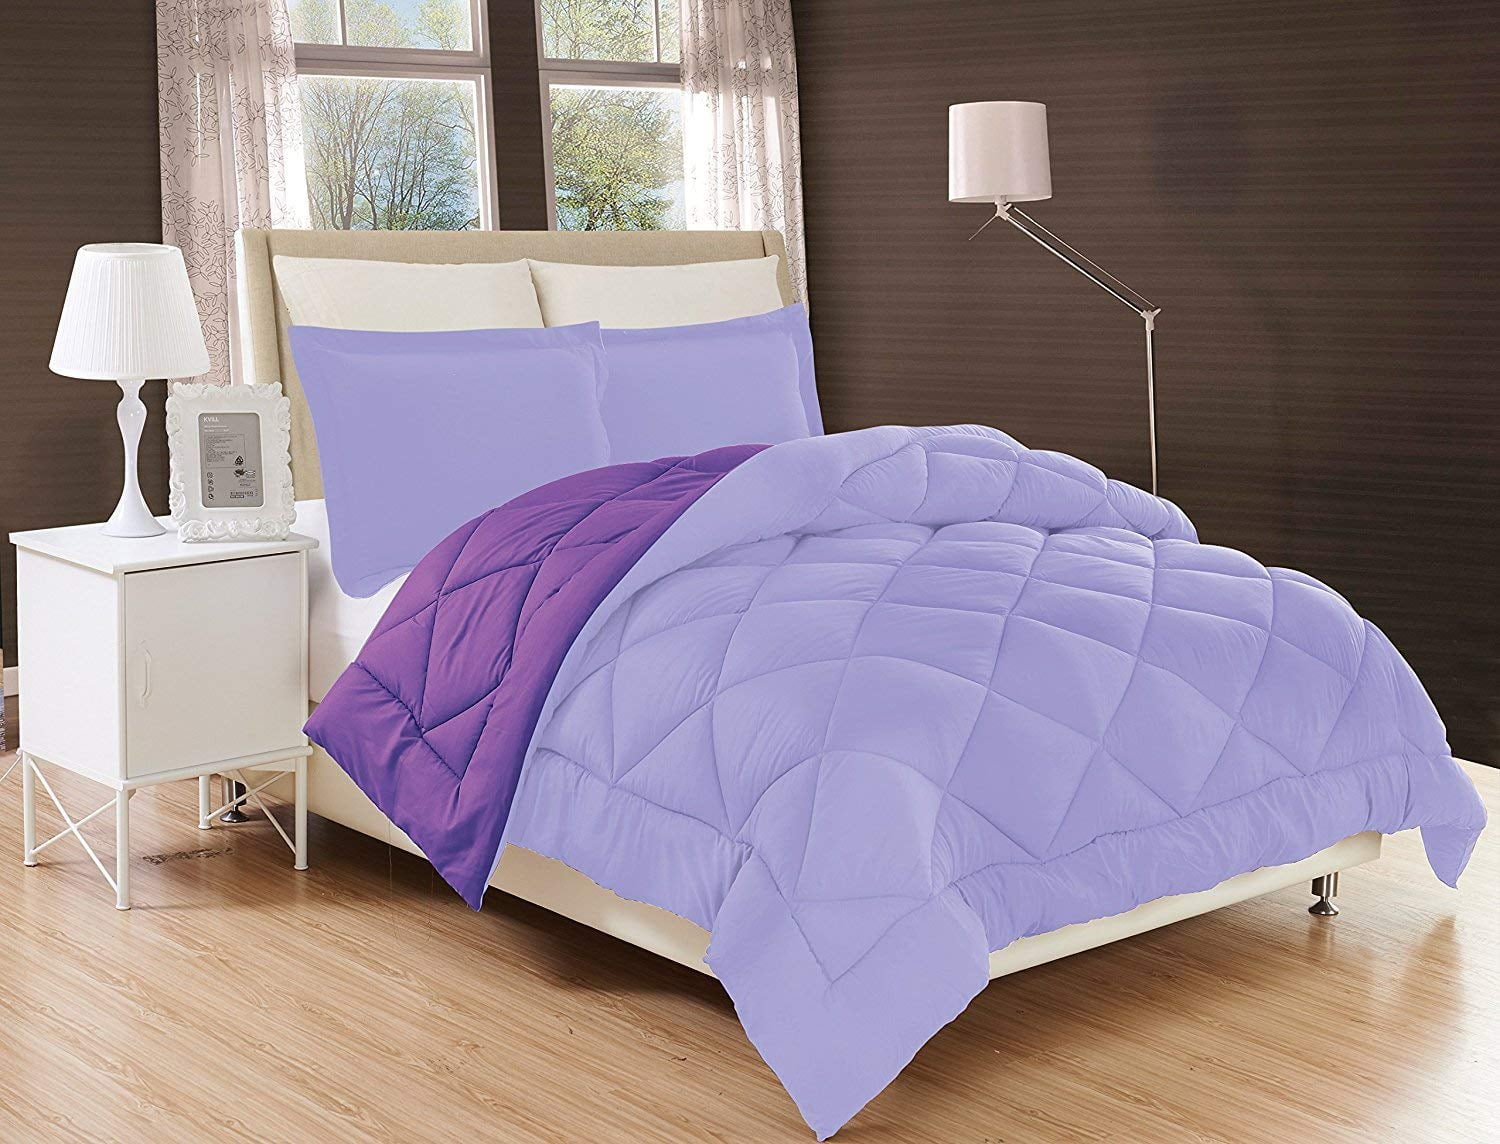 Details about   Tremendous All Season Down Alternative Comforter Purple Striped US Cal King Size 